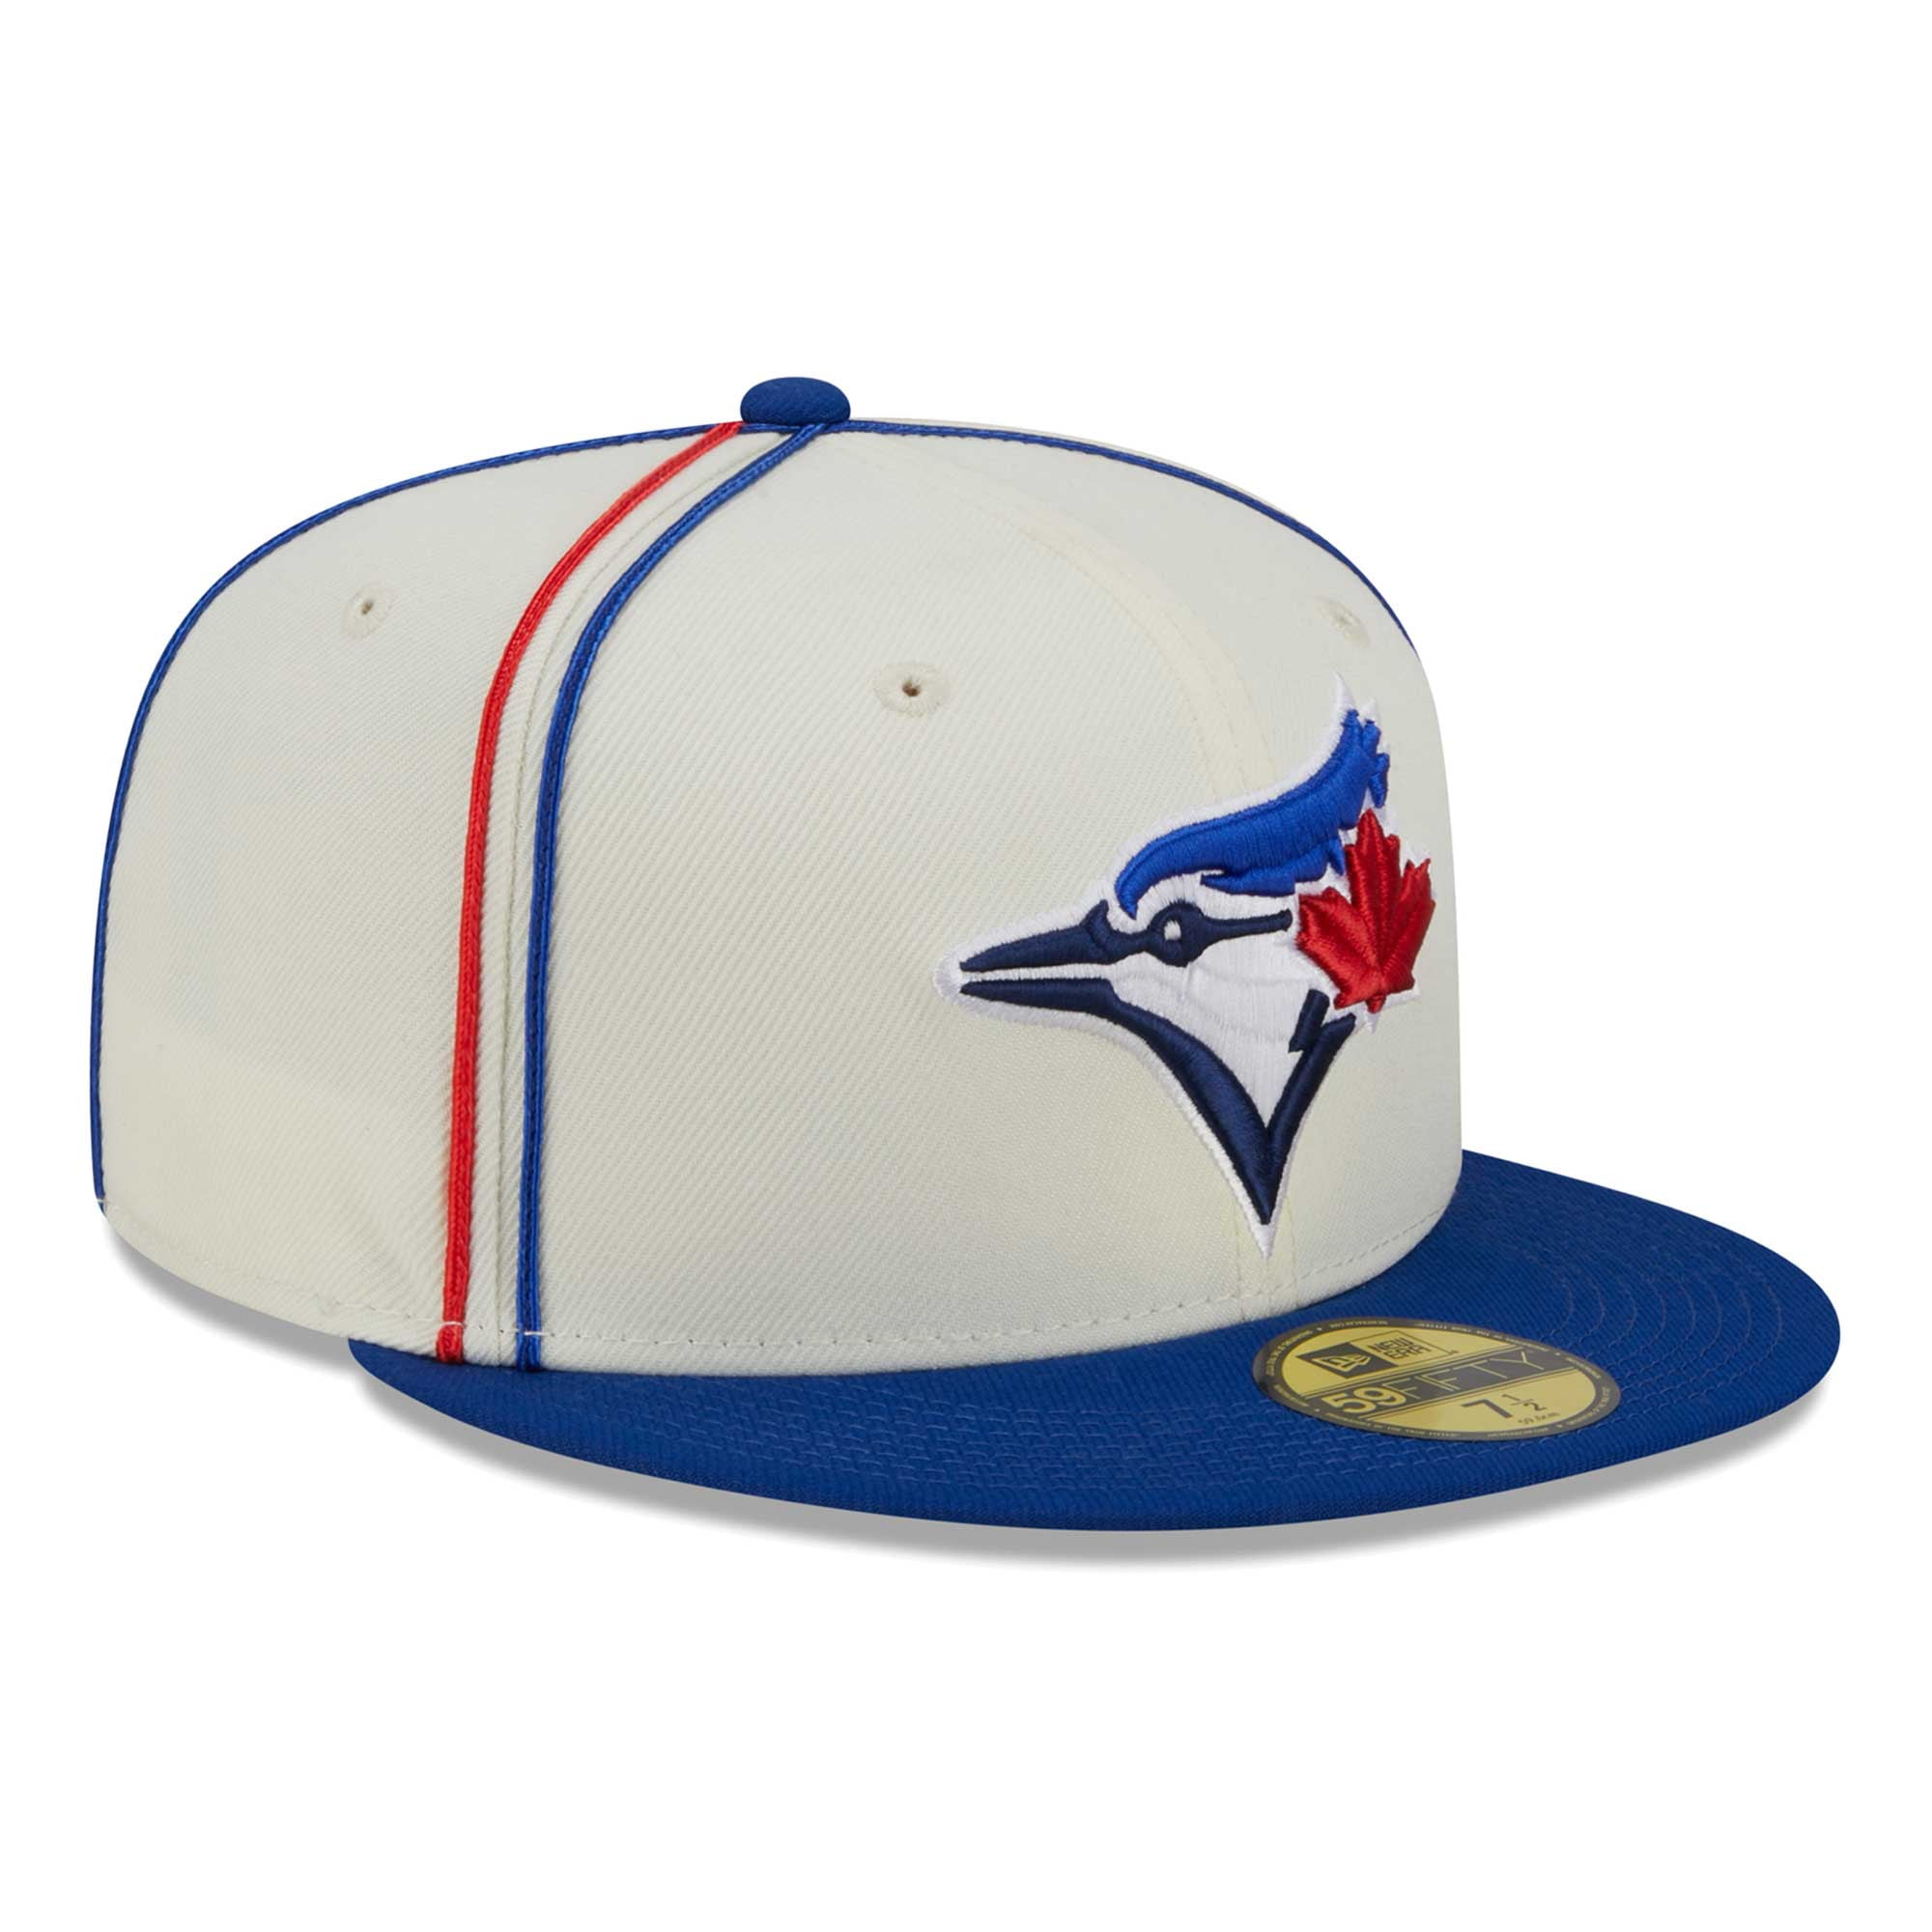 Men's New Era Cream/Royal Toronto Blue Jays Chrome Sutash 59FIFTY Fitted Hat